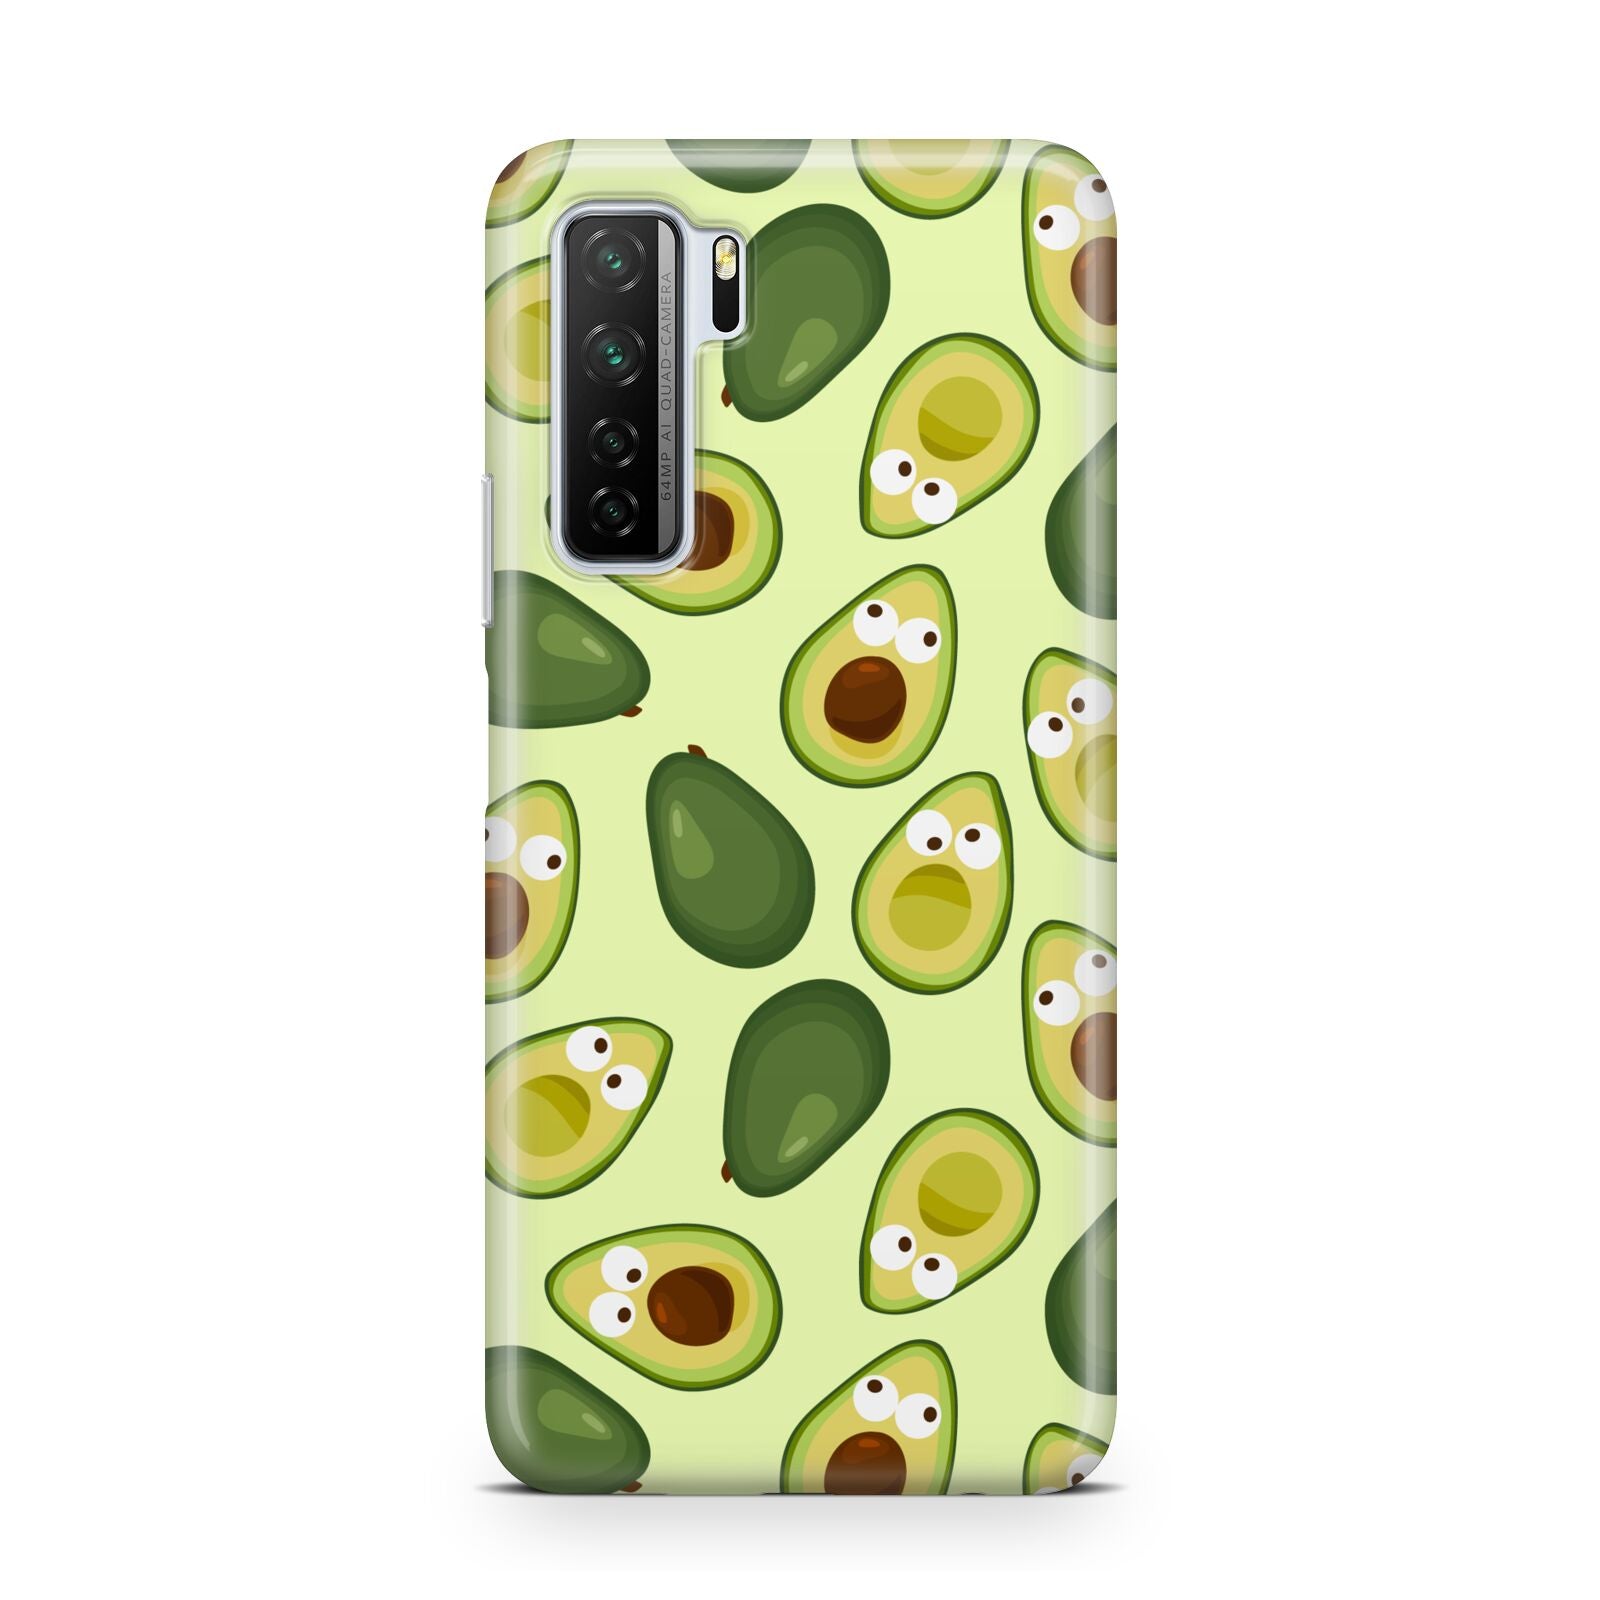 Avocado Huawei P40 Lite 5G Phone Case